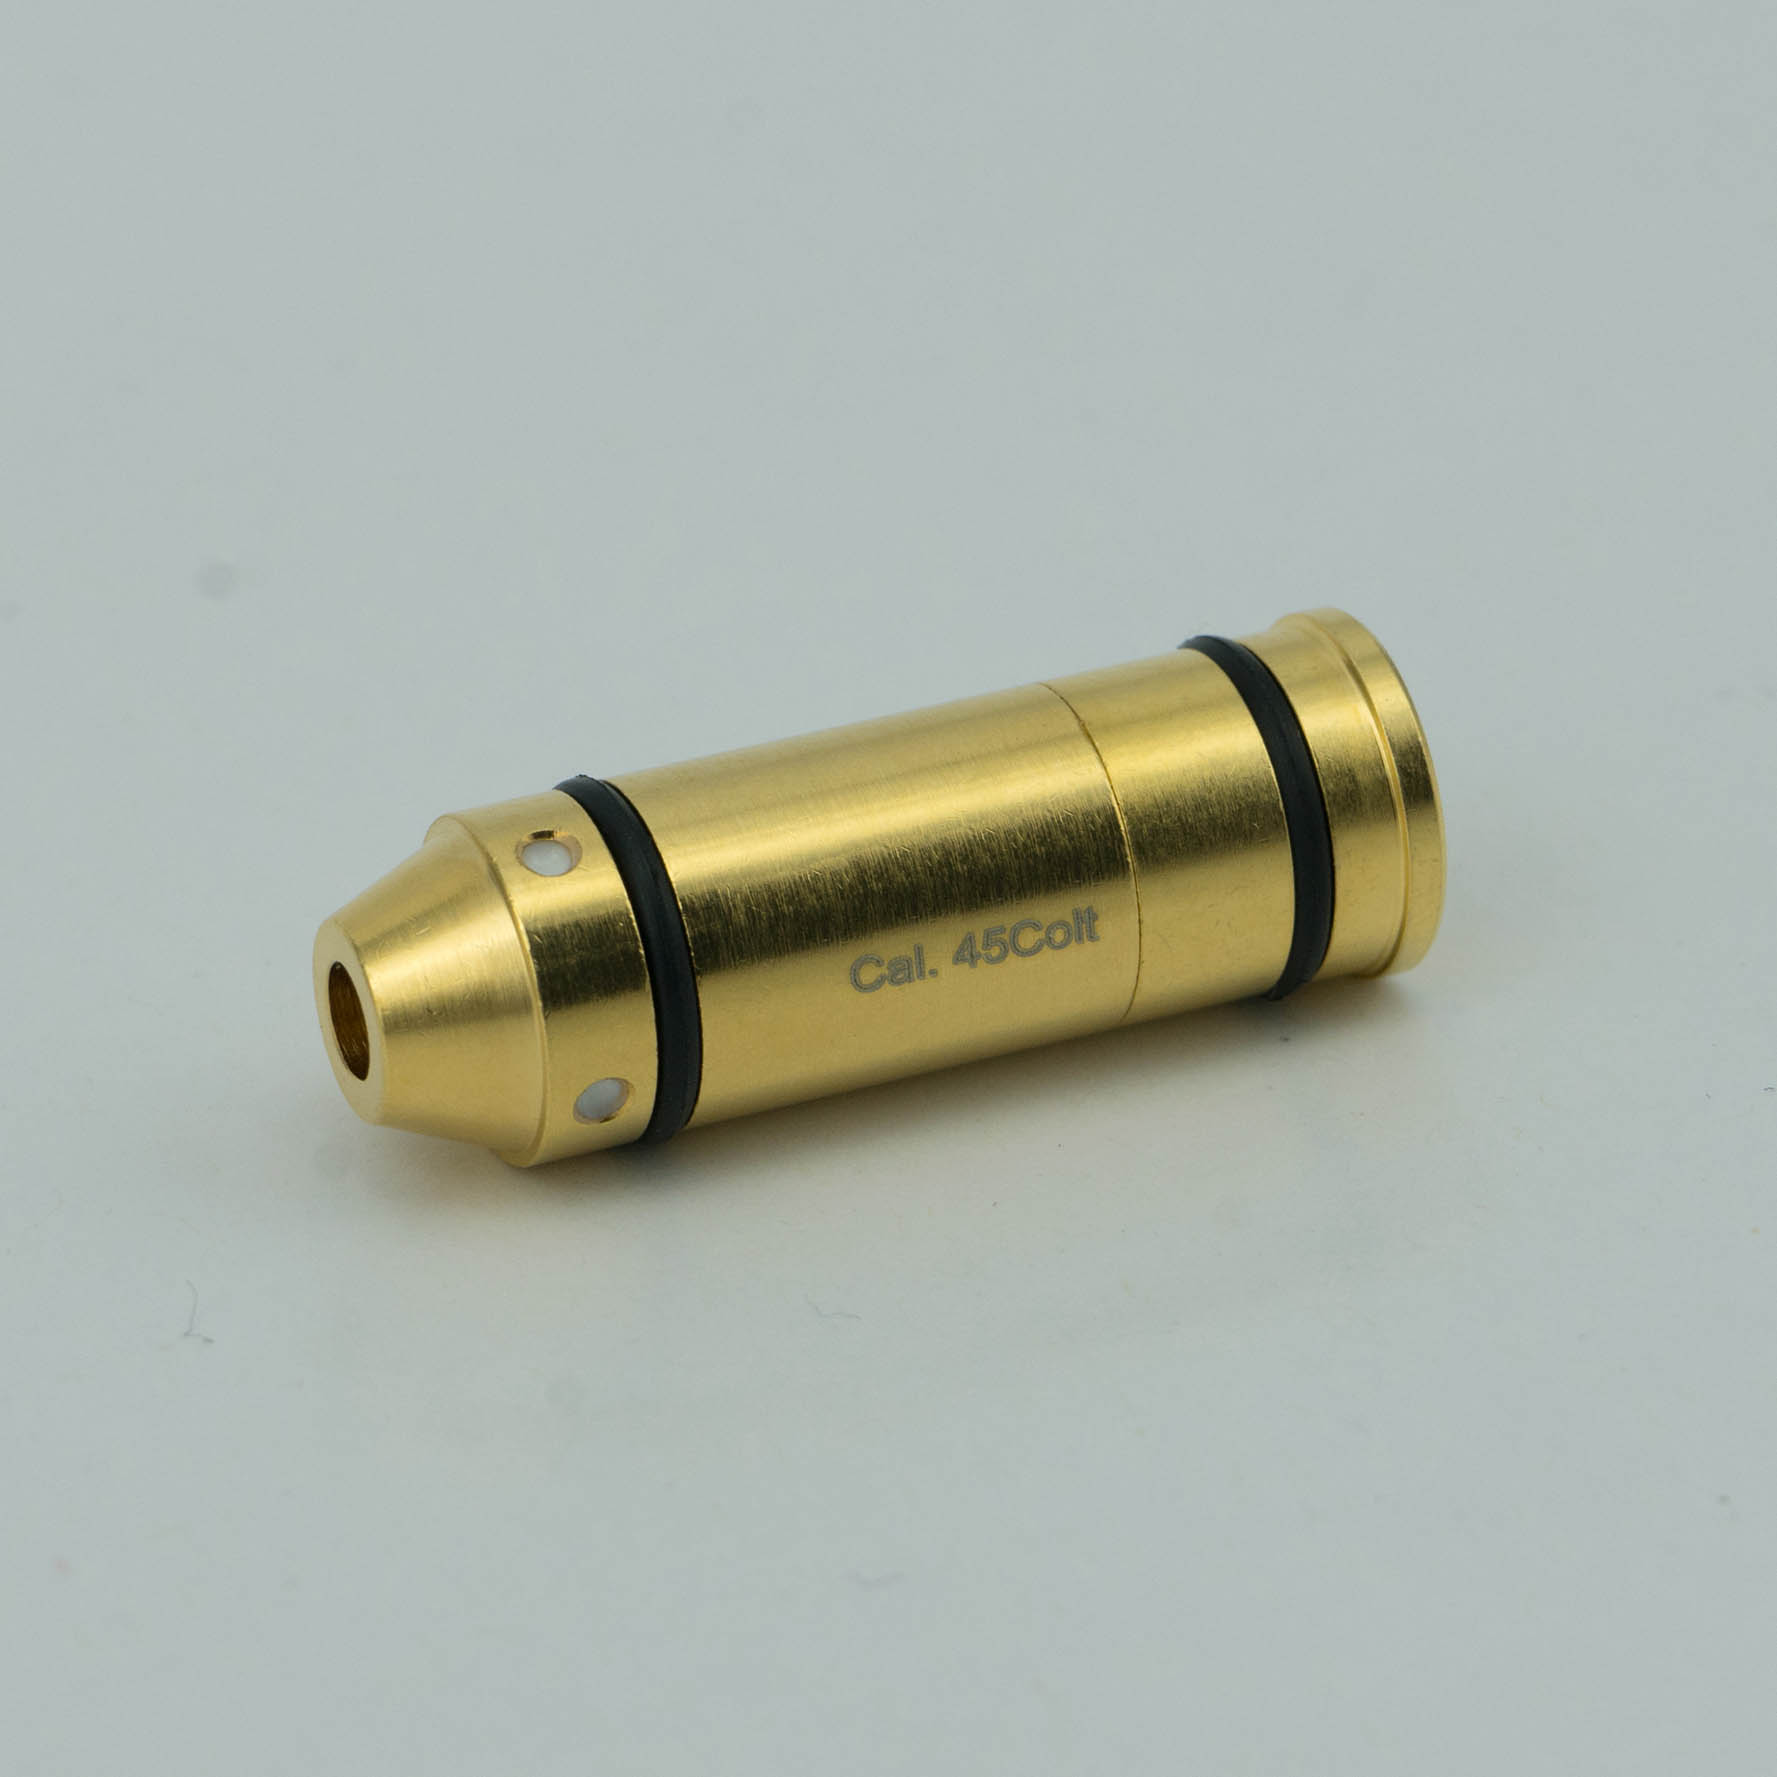 Kugellaser Traget Tainer 45 Colt Laser Bullet für Laser-Treffer-Training